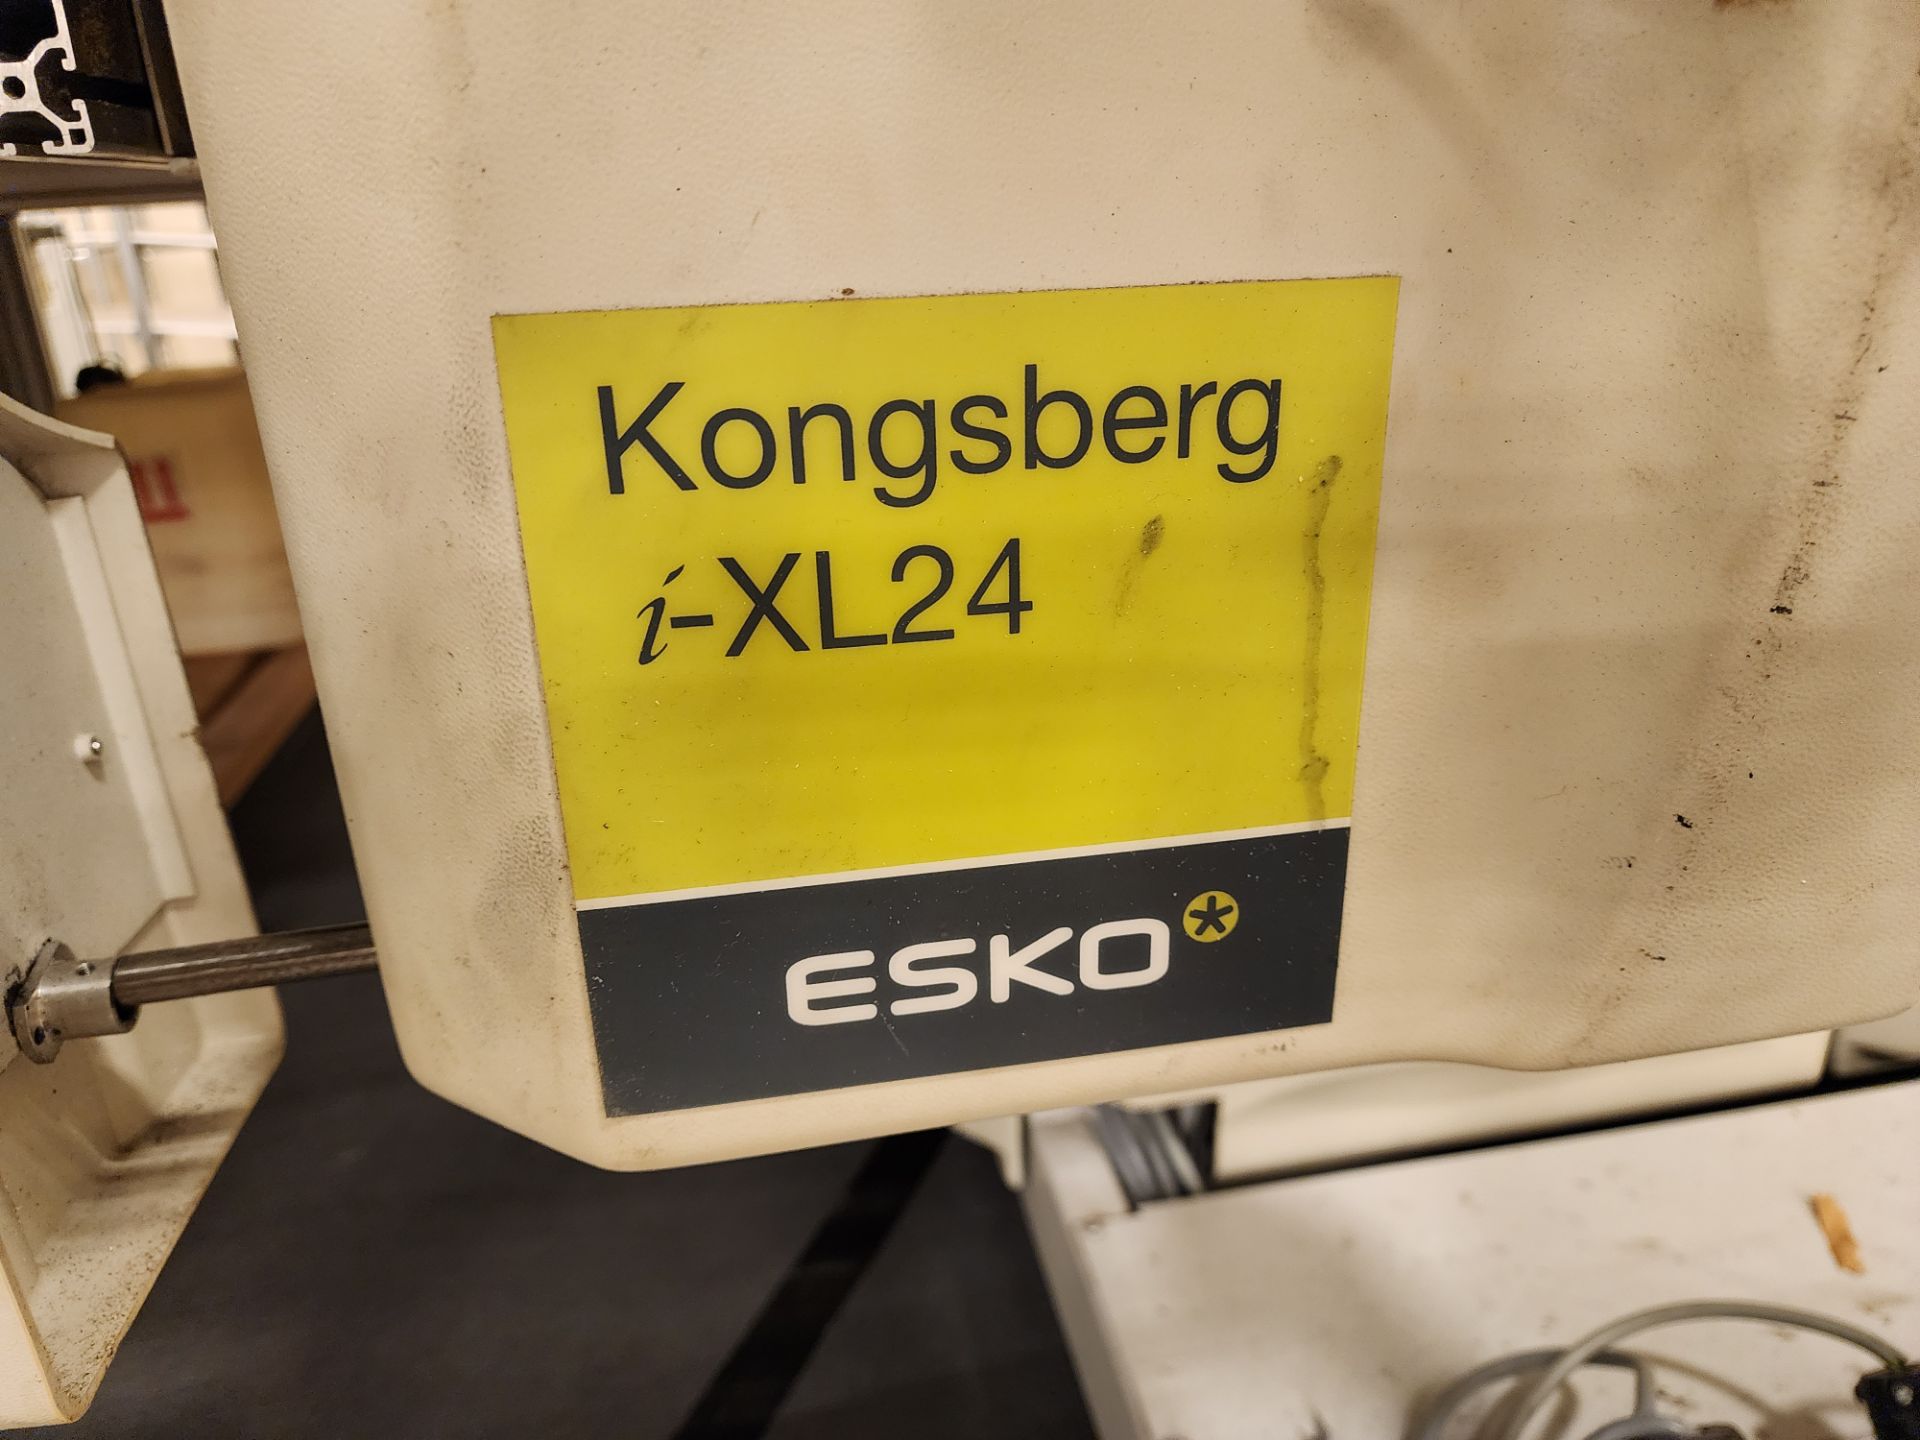 Esko Kongsberg Model i-XL24 CNC Router/Cutter, 66" x 120", S/N 704565 (2006) - Image 11 of 14